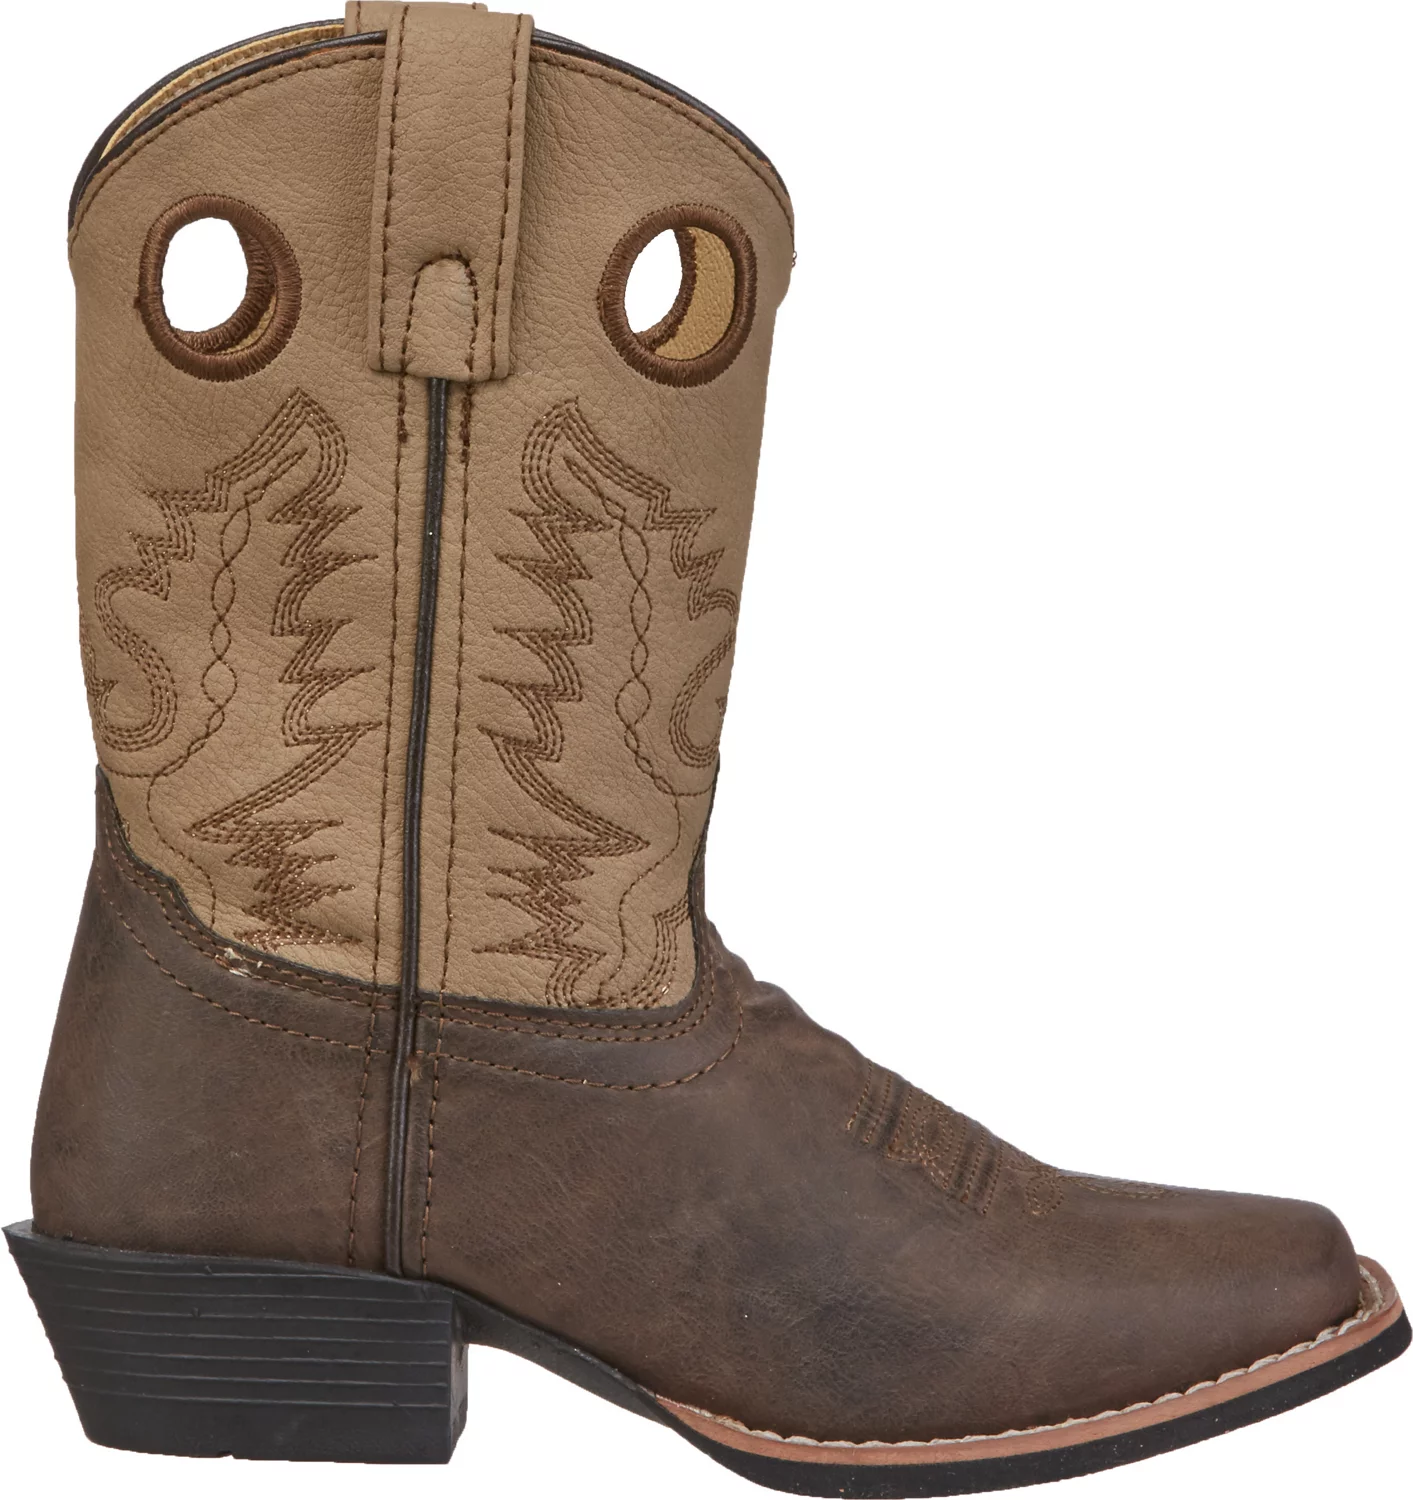 Boys' Western Boots | Boys' Cowboy Boots, Western Boots For Boys ...